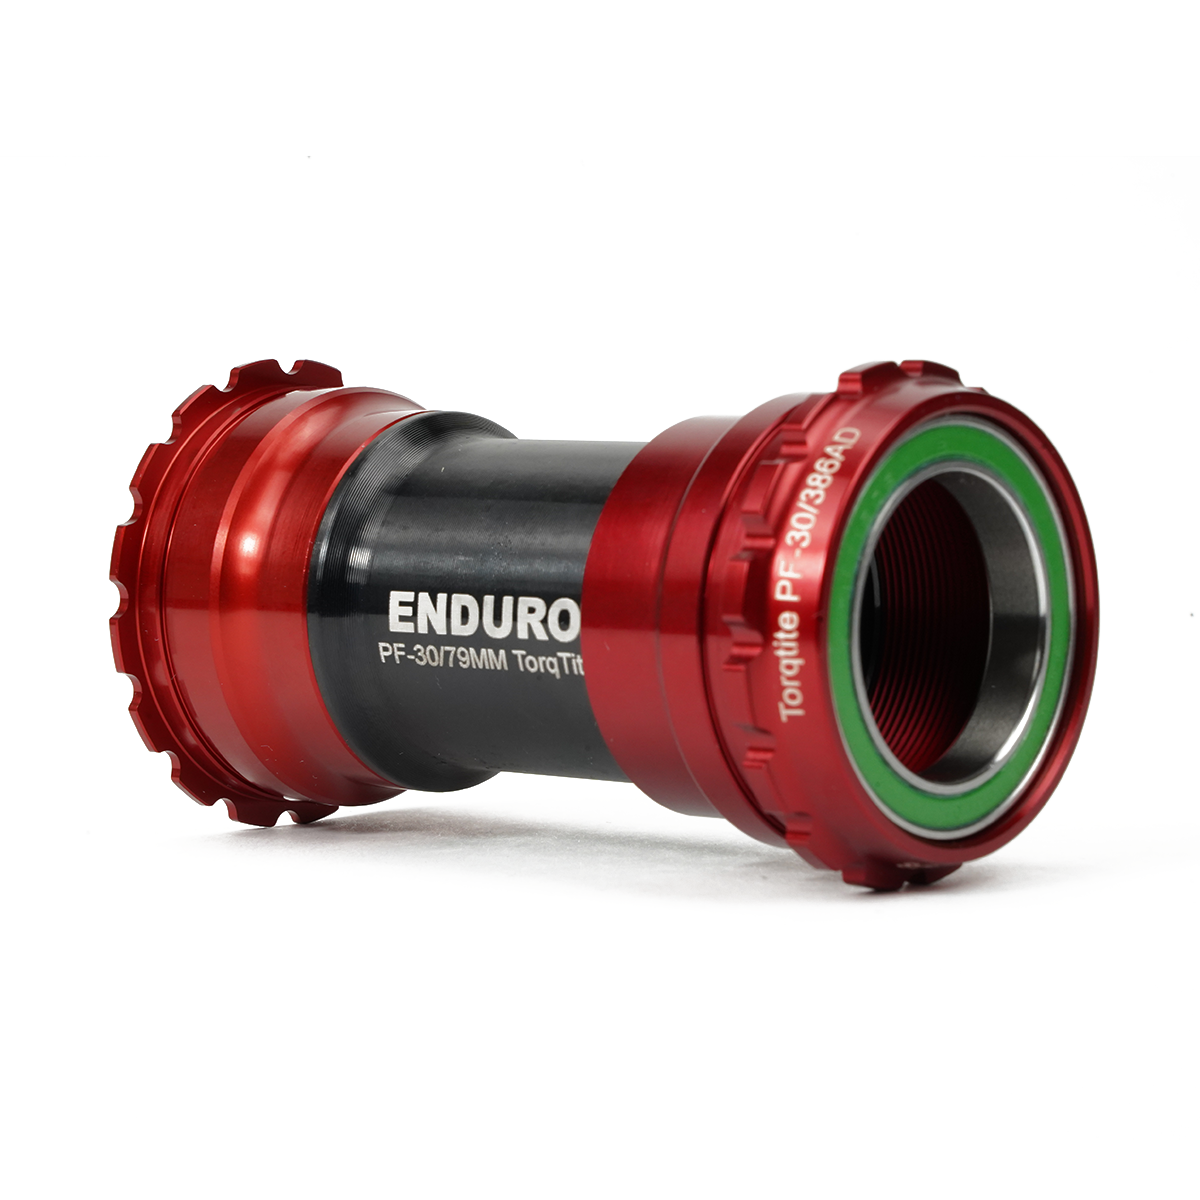 Enduro BKC-0857 - TorqTite, Ceramic-Hybrid, XD-15, Angular Contact, Bearing Bottom Bracket for BBRight Framesets and SRAM DUB/29mm Cranksets - Red